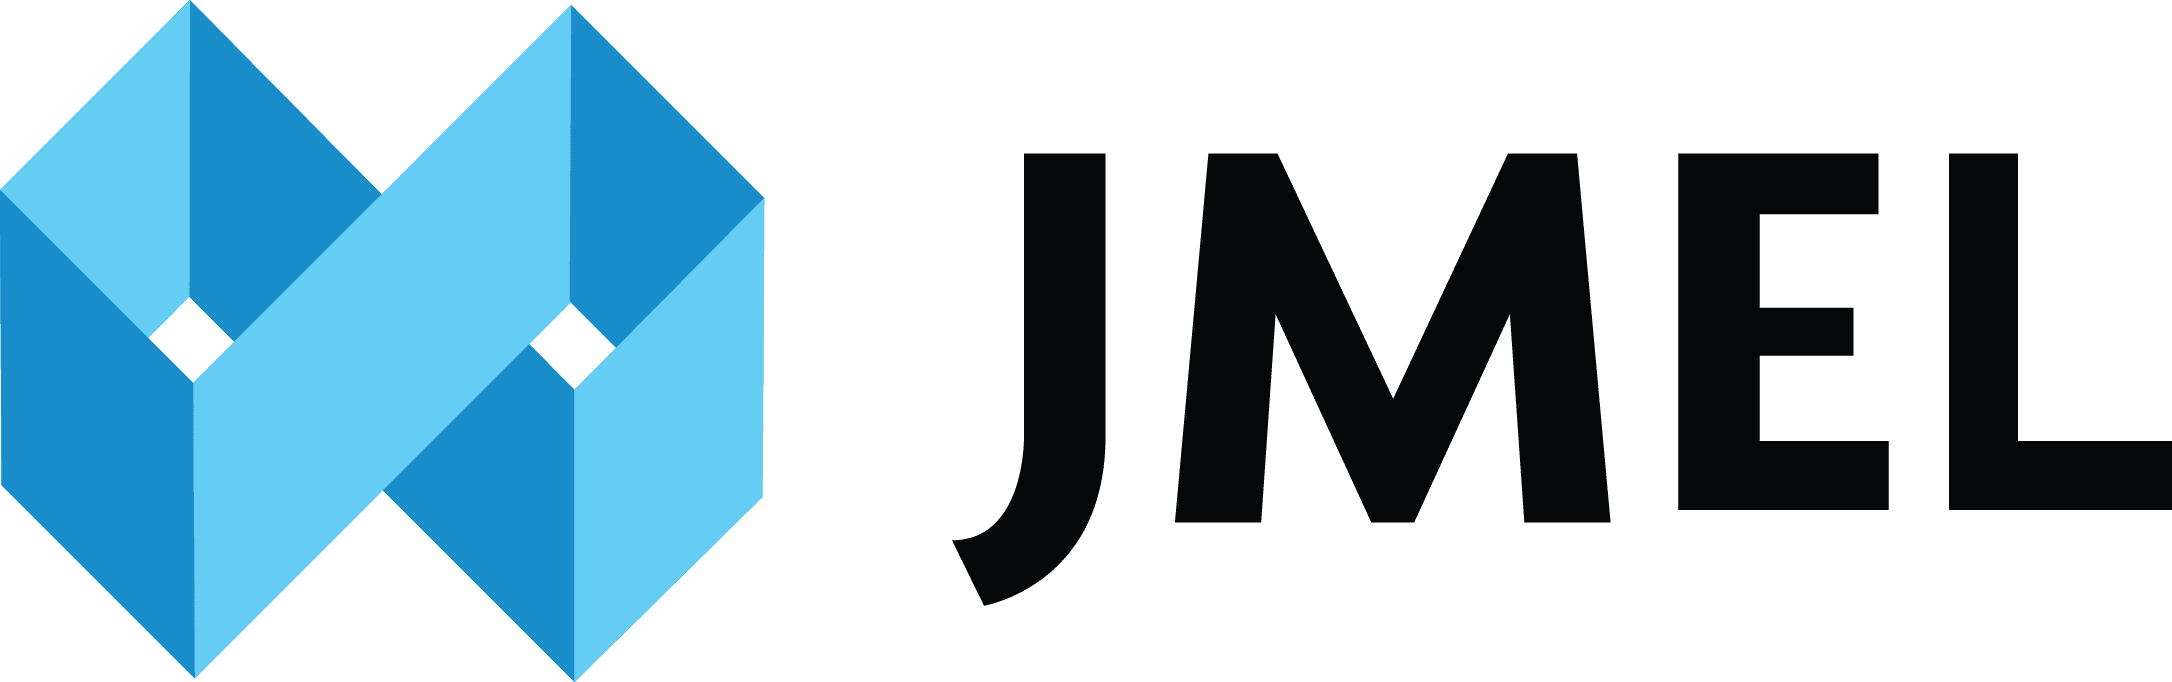 Logo-Jaya Makmur-png